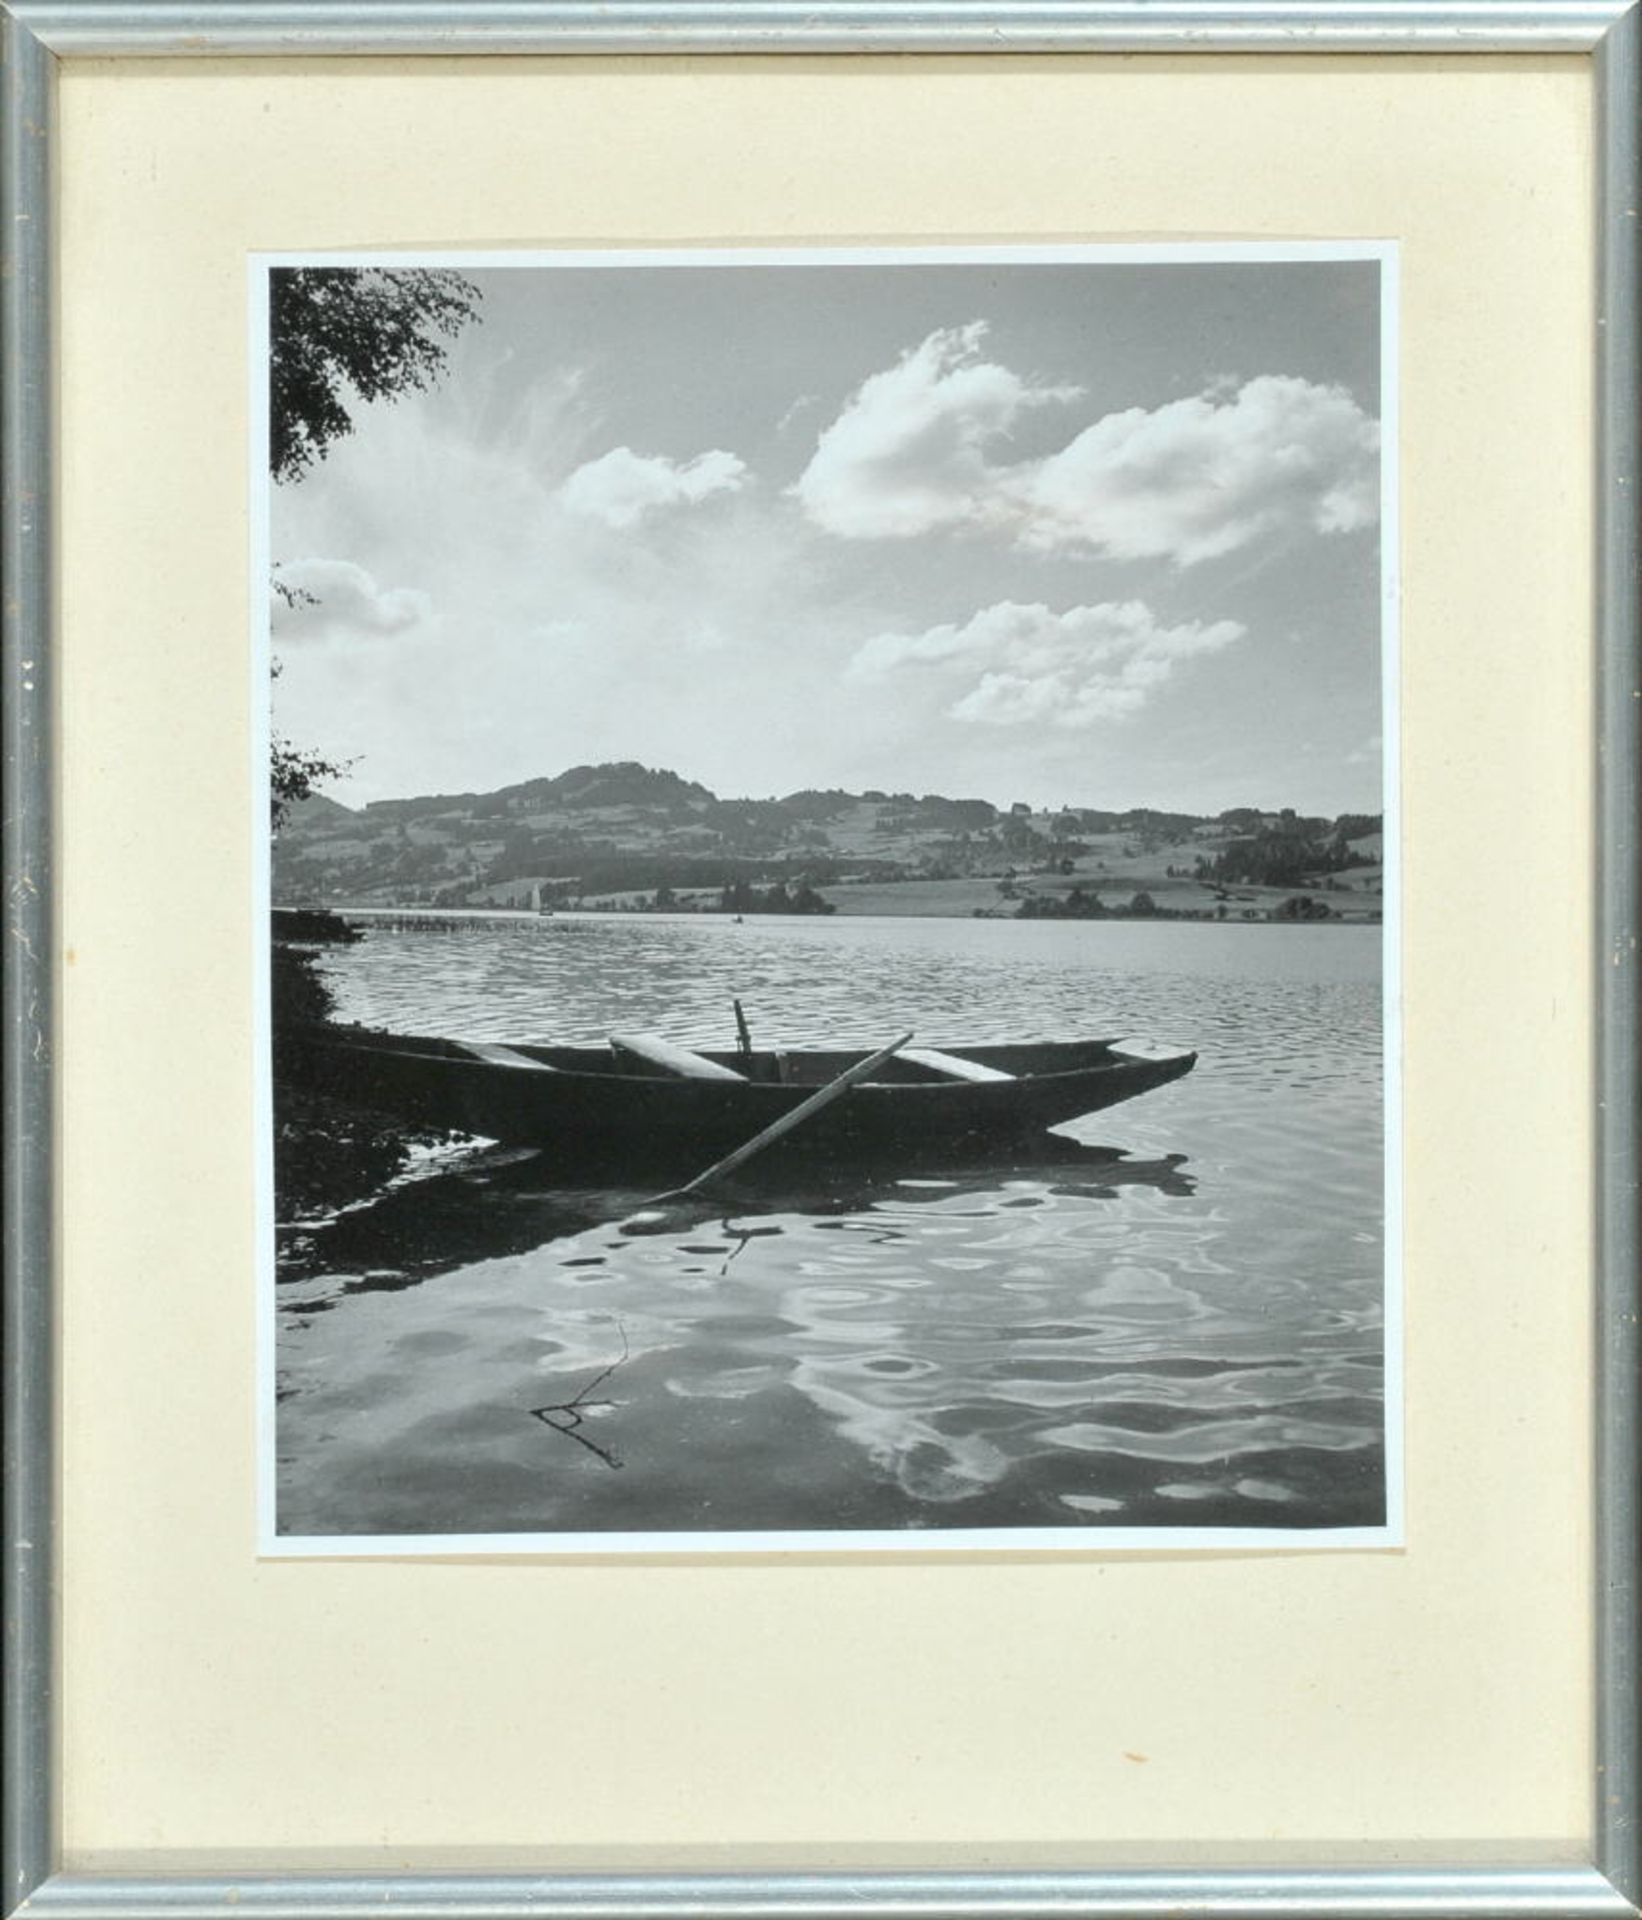 Fotografie, 1952